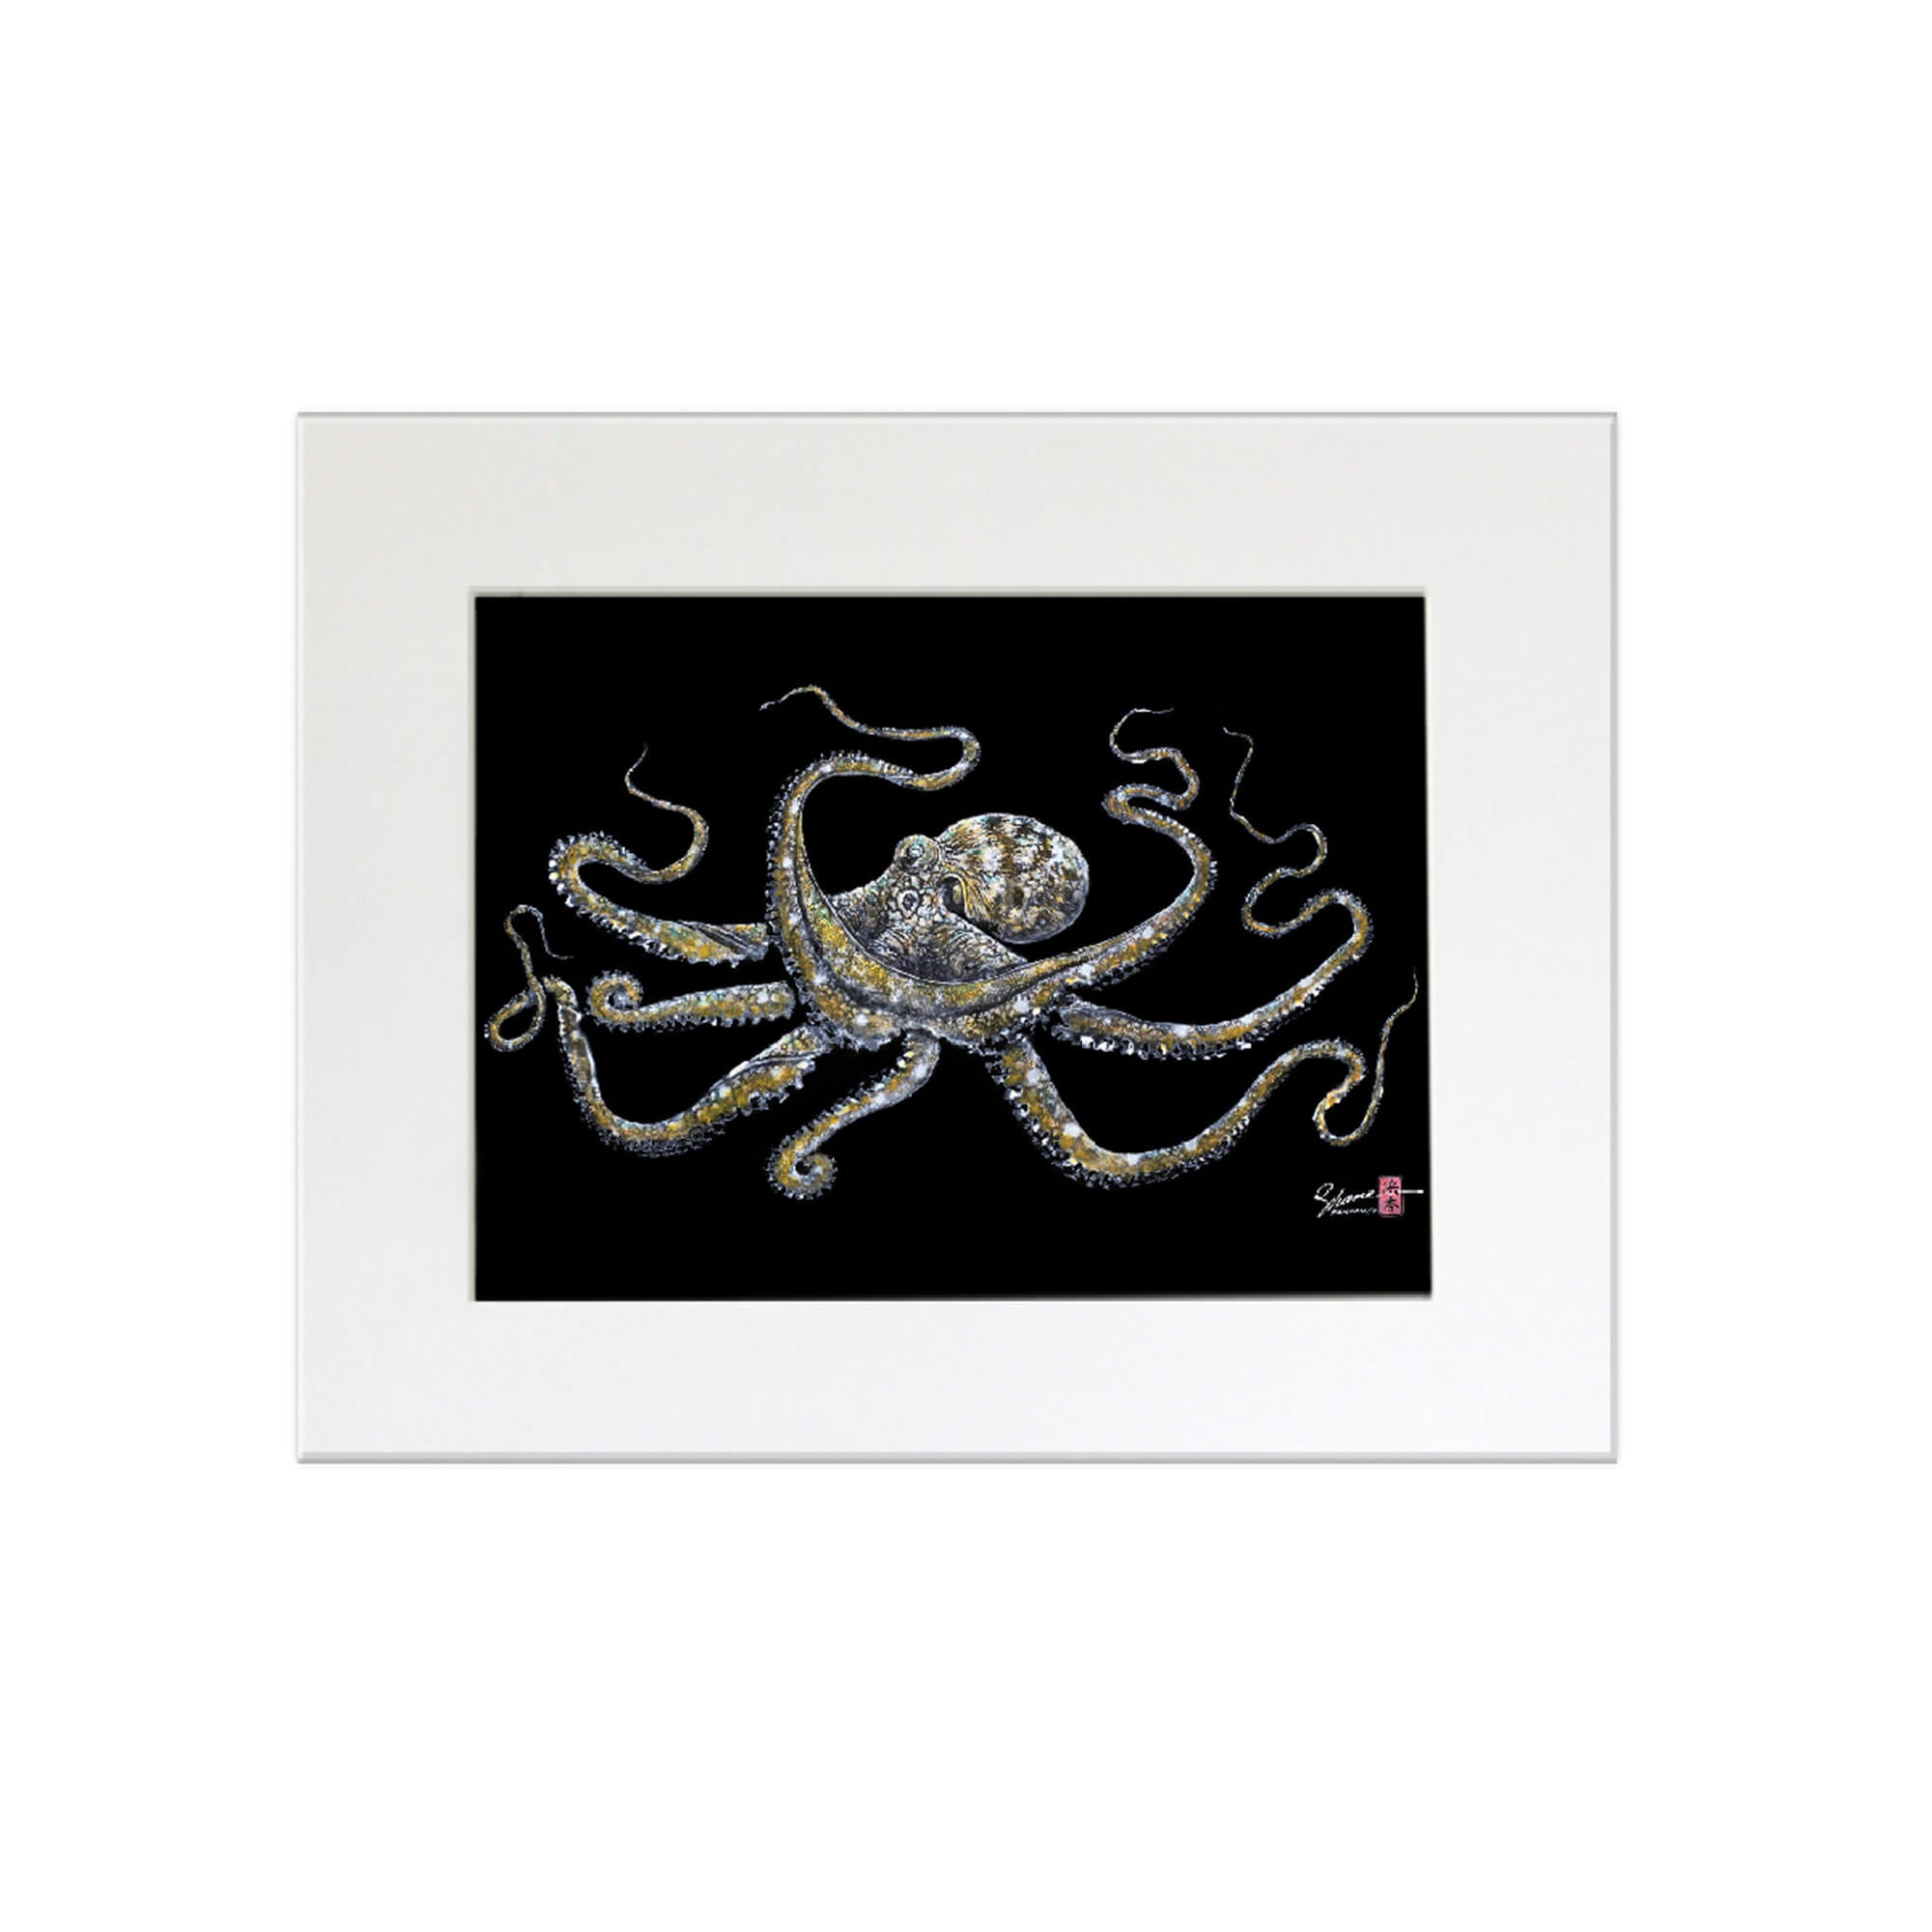 Matted print of Tako (octopus) in black frame by Hawaii gyotaku artist Shane Hamamoto